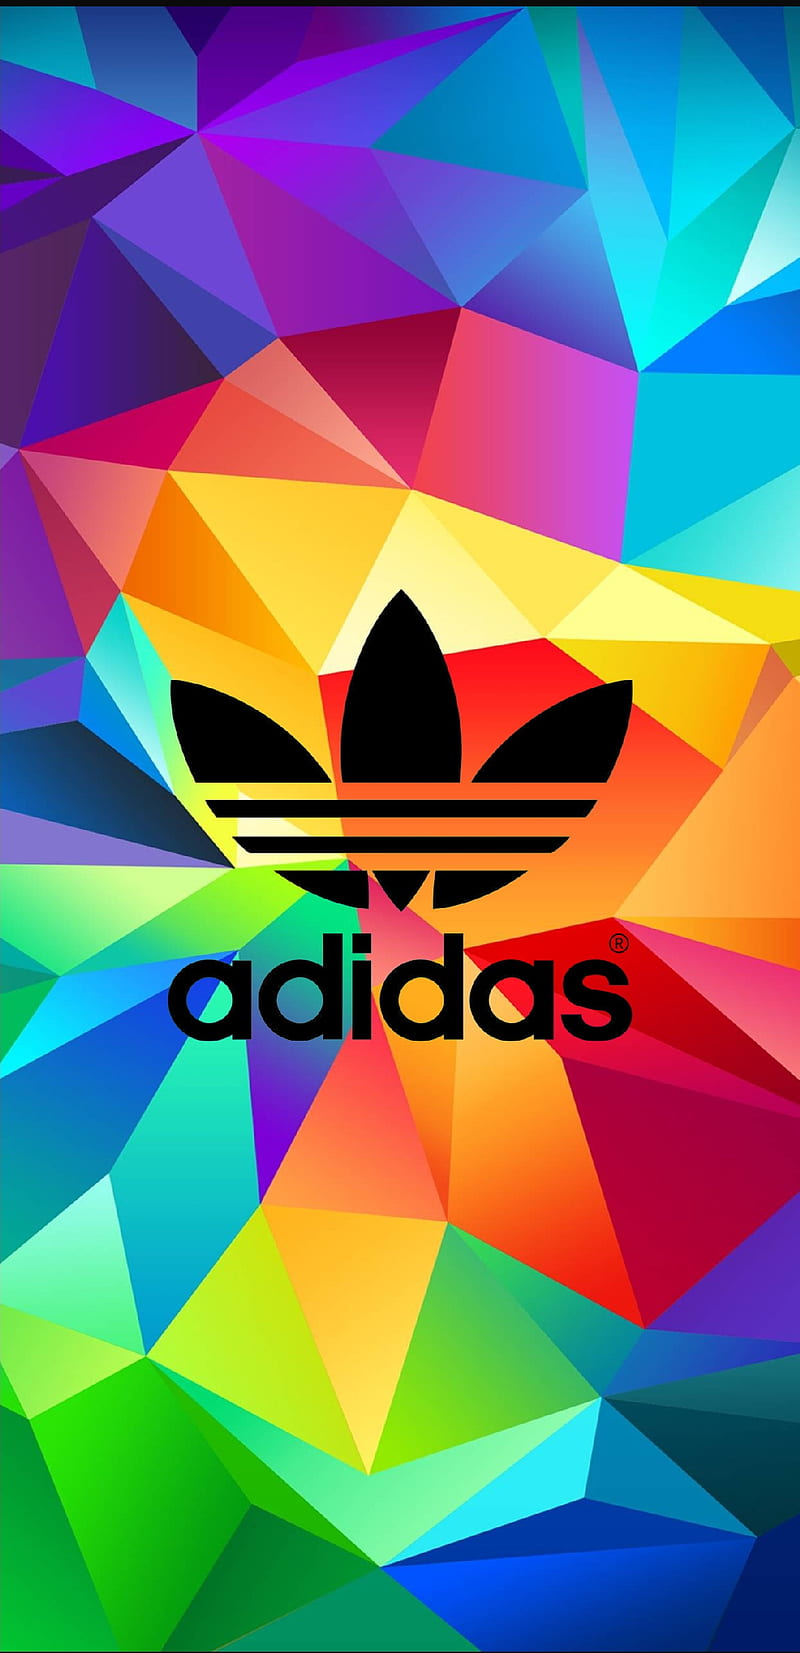 Wallpaper ID: 162807 / Nike, Adidas, Puma, space, logo, red, purple,  turquoise, black background Wallpaper